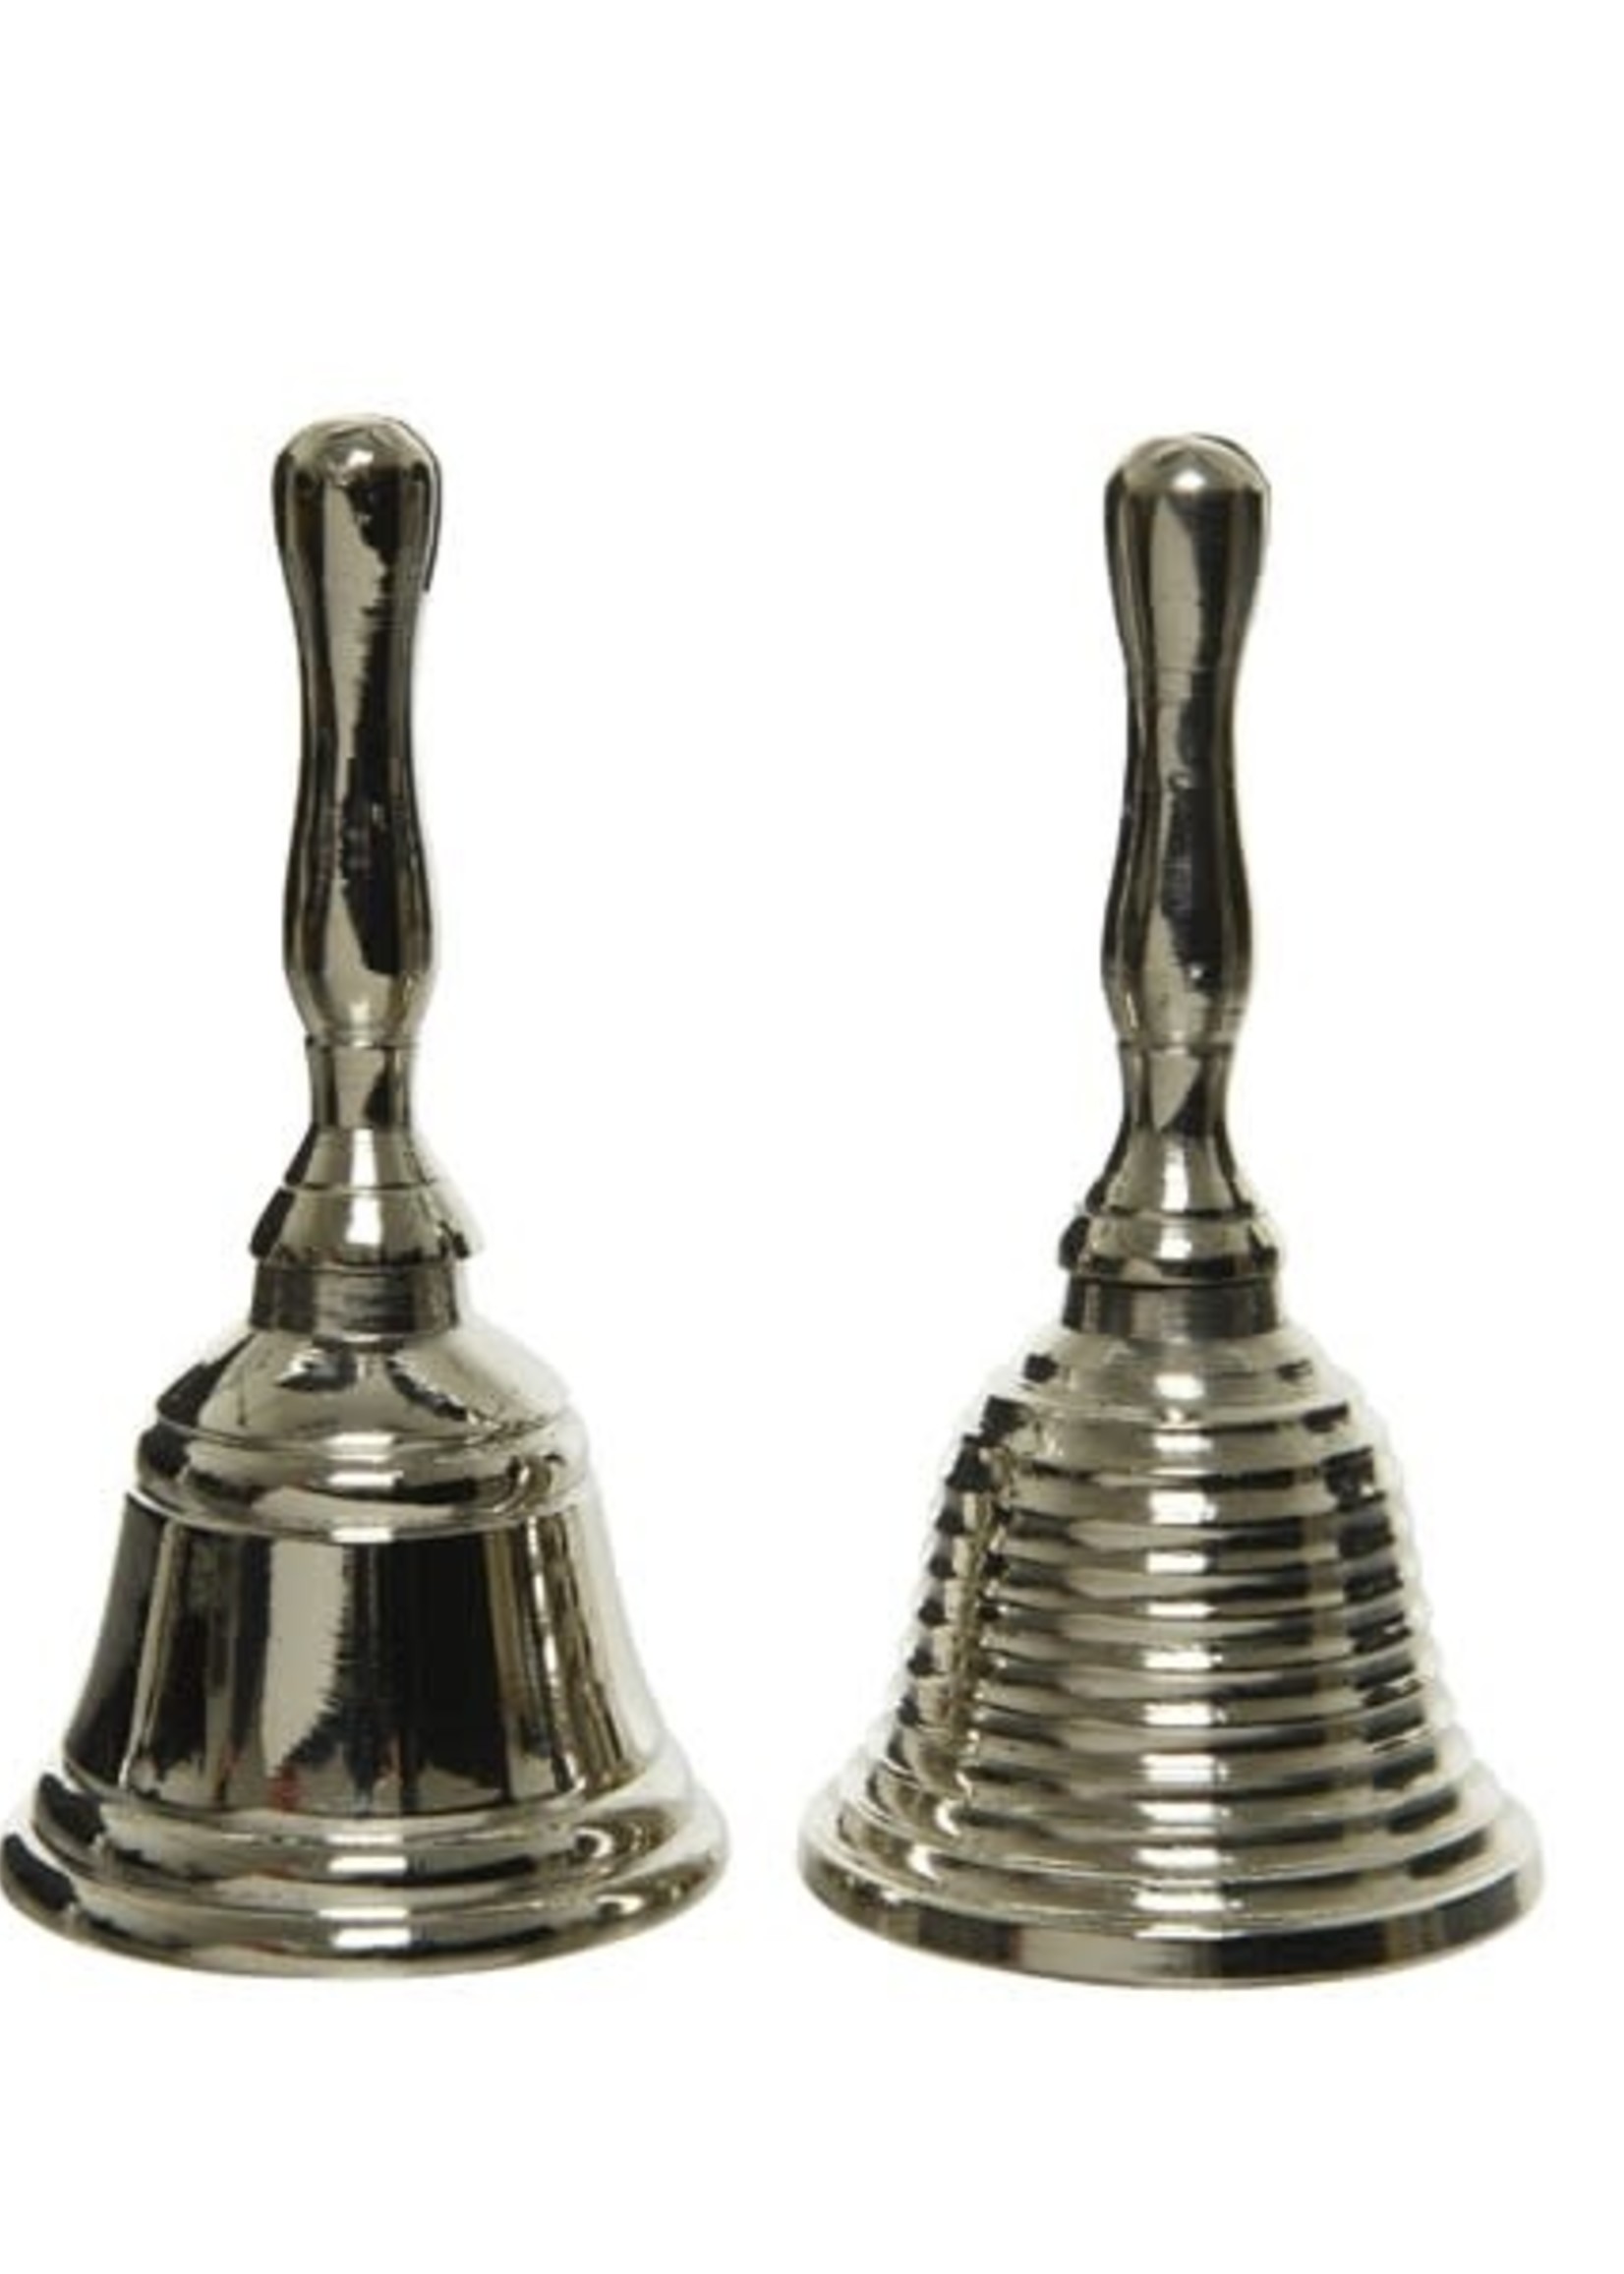 Decoris Small Aluminium Bell 2 styles available